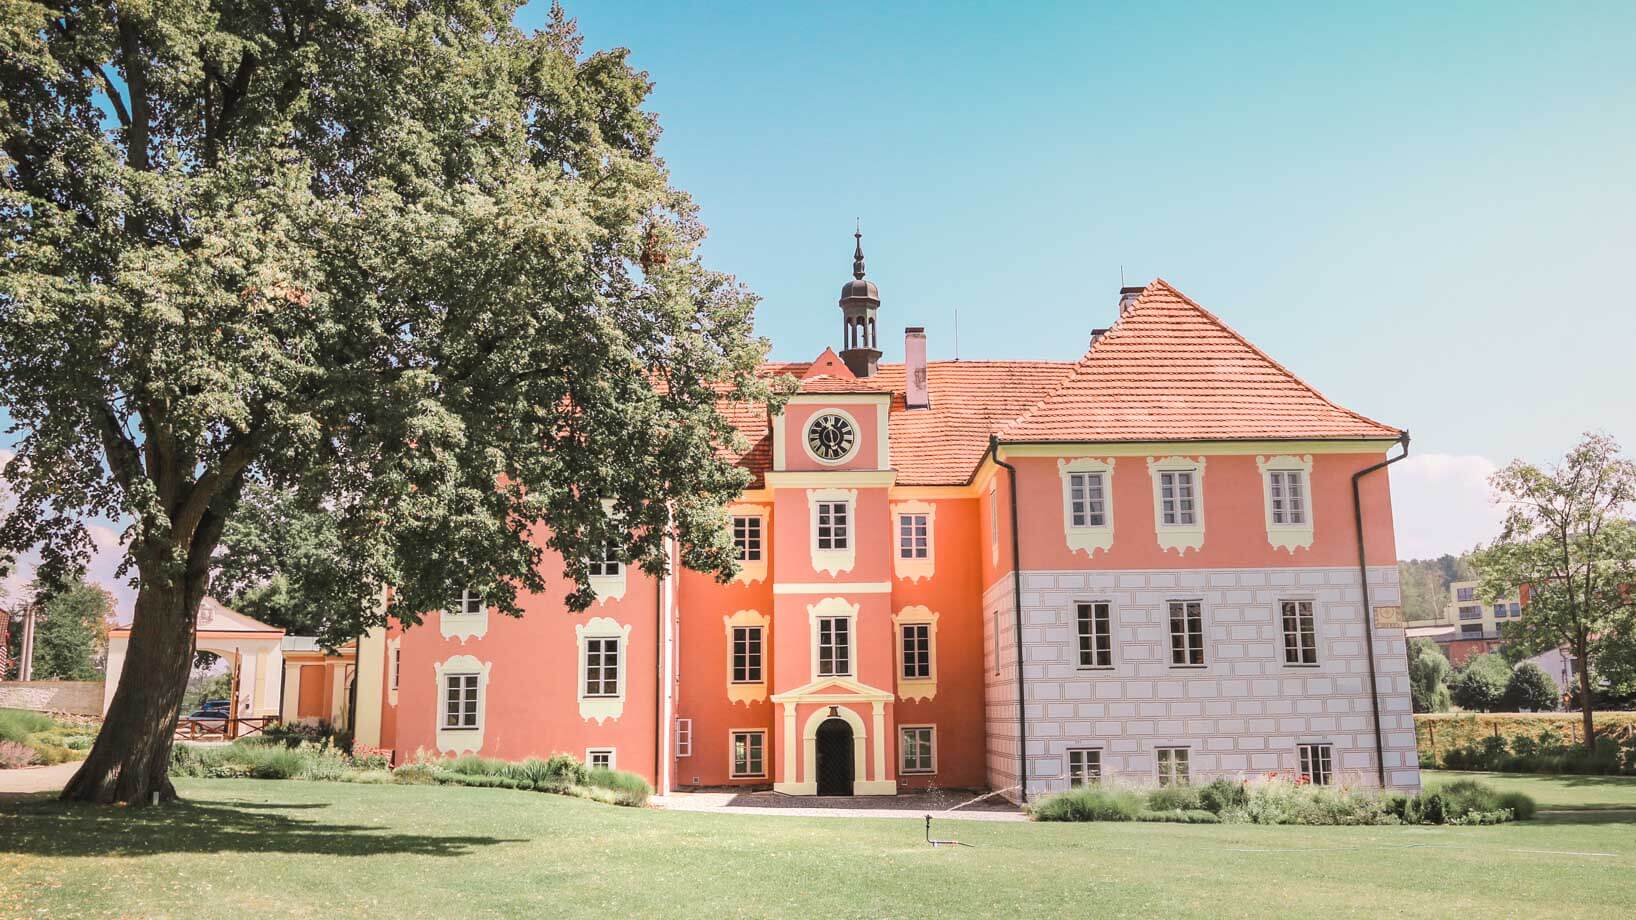 Mitrowicz Castle Garden Fairy-Tale Castles in Czech Republic That You Didn't Know About